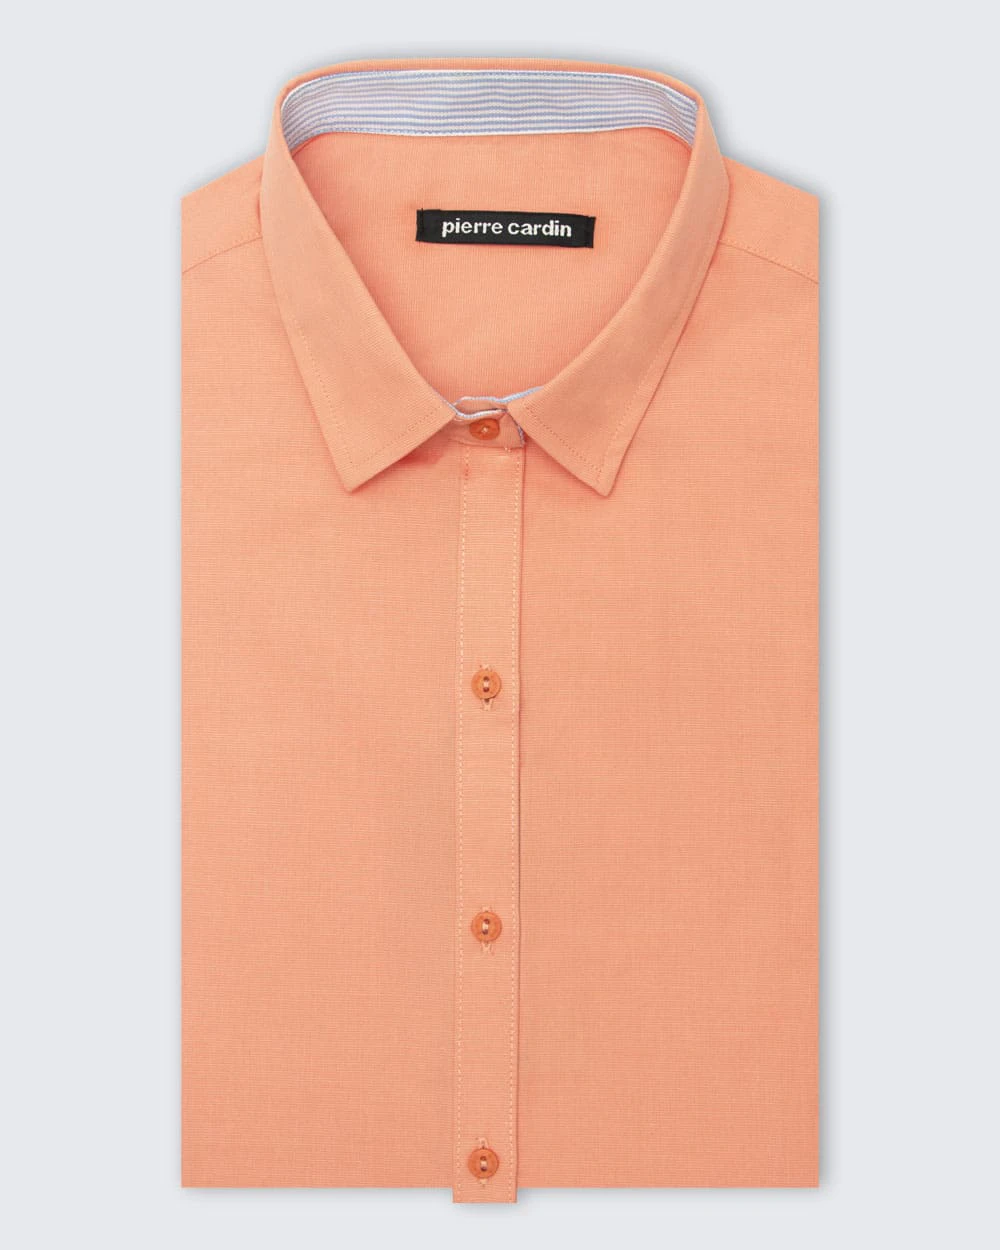 Blusa lisa de vestir slim fit manga larga anaranjada